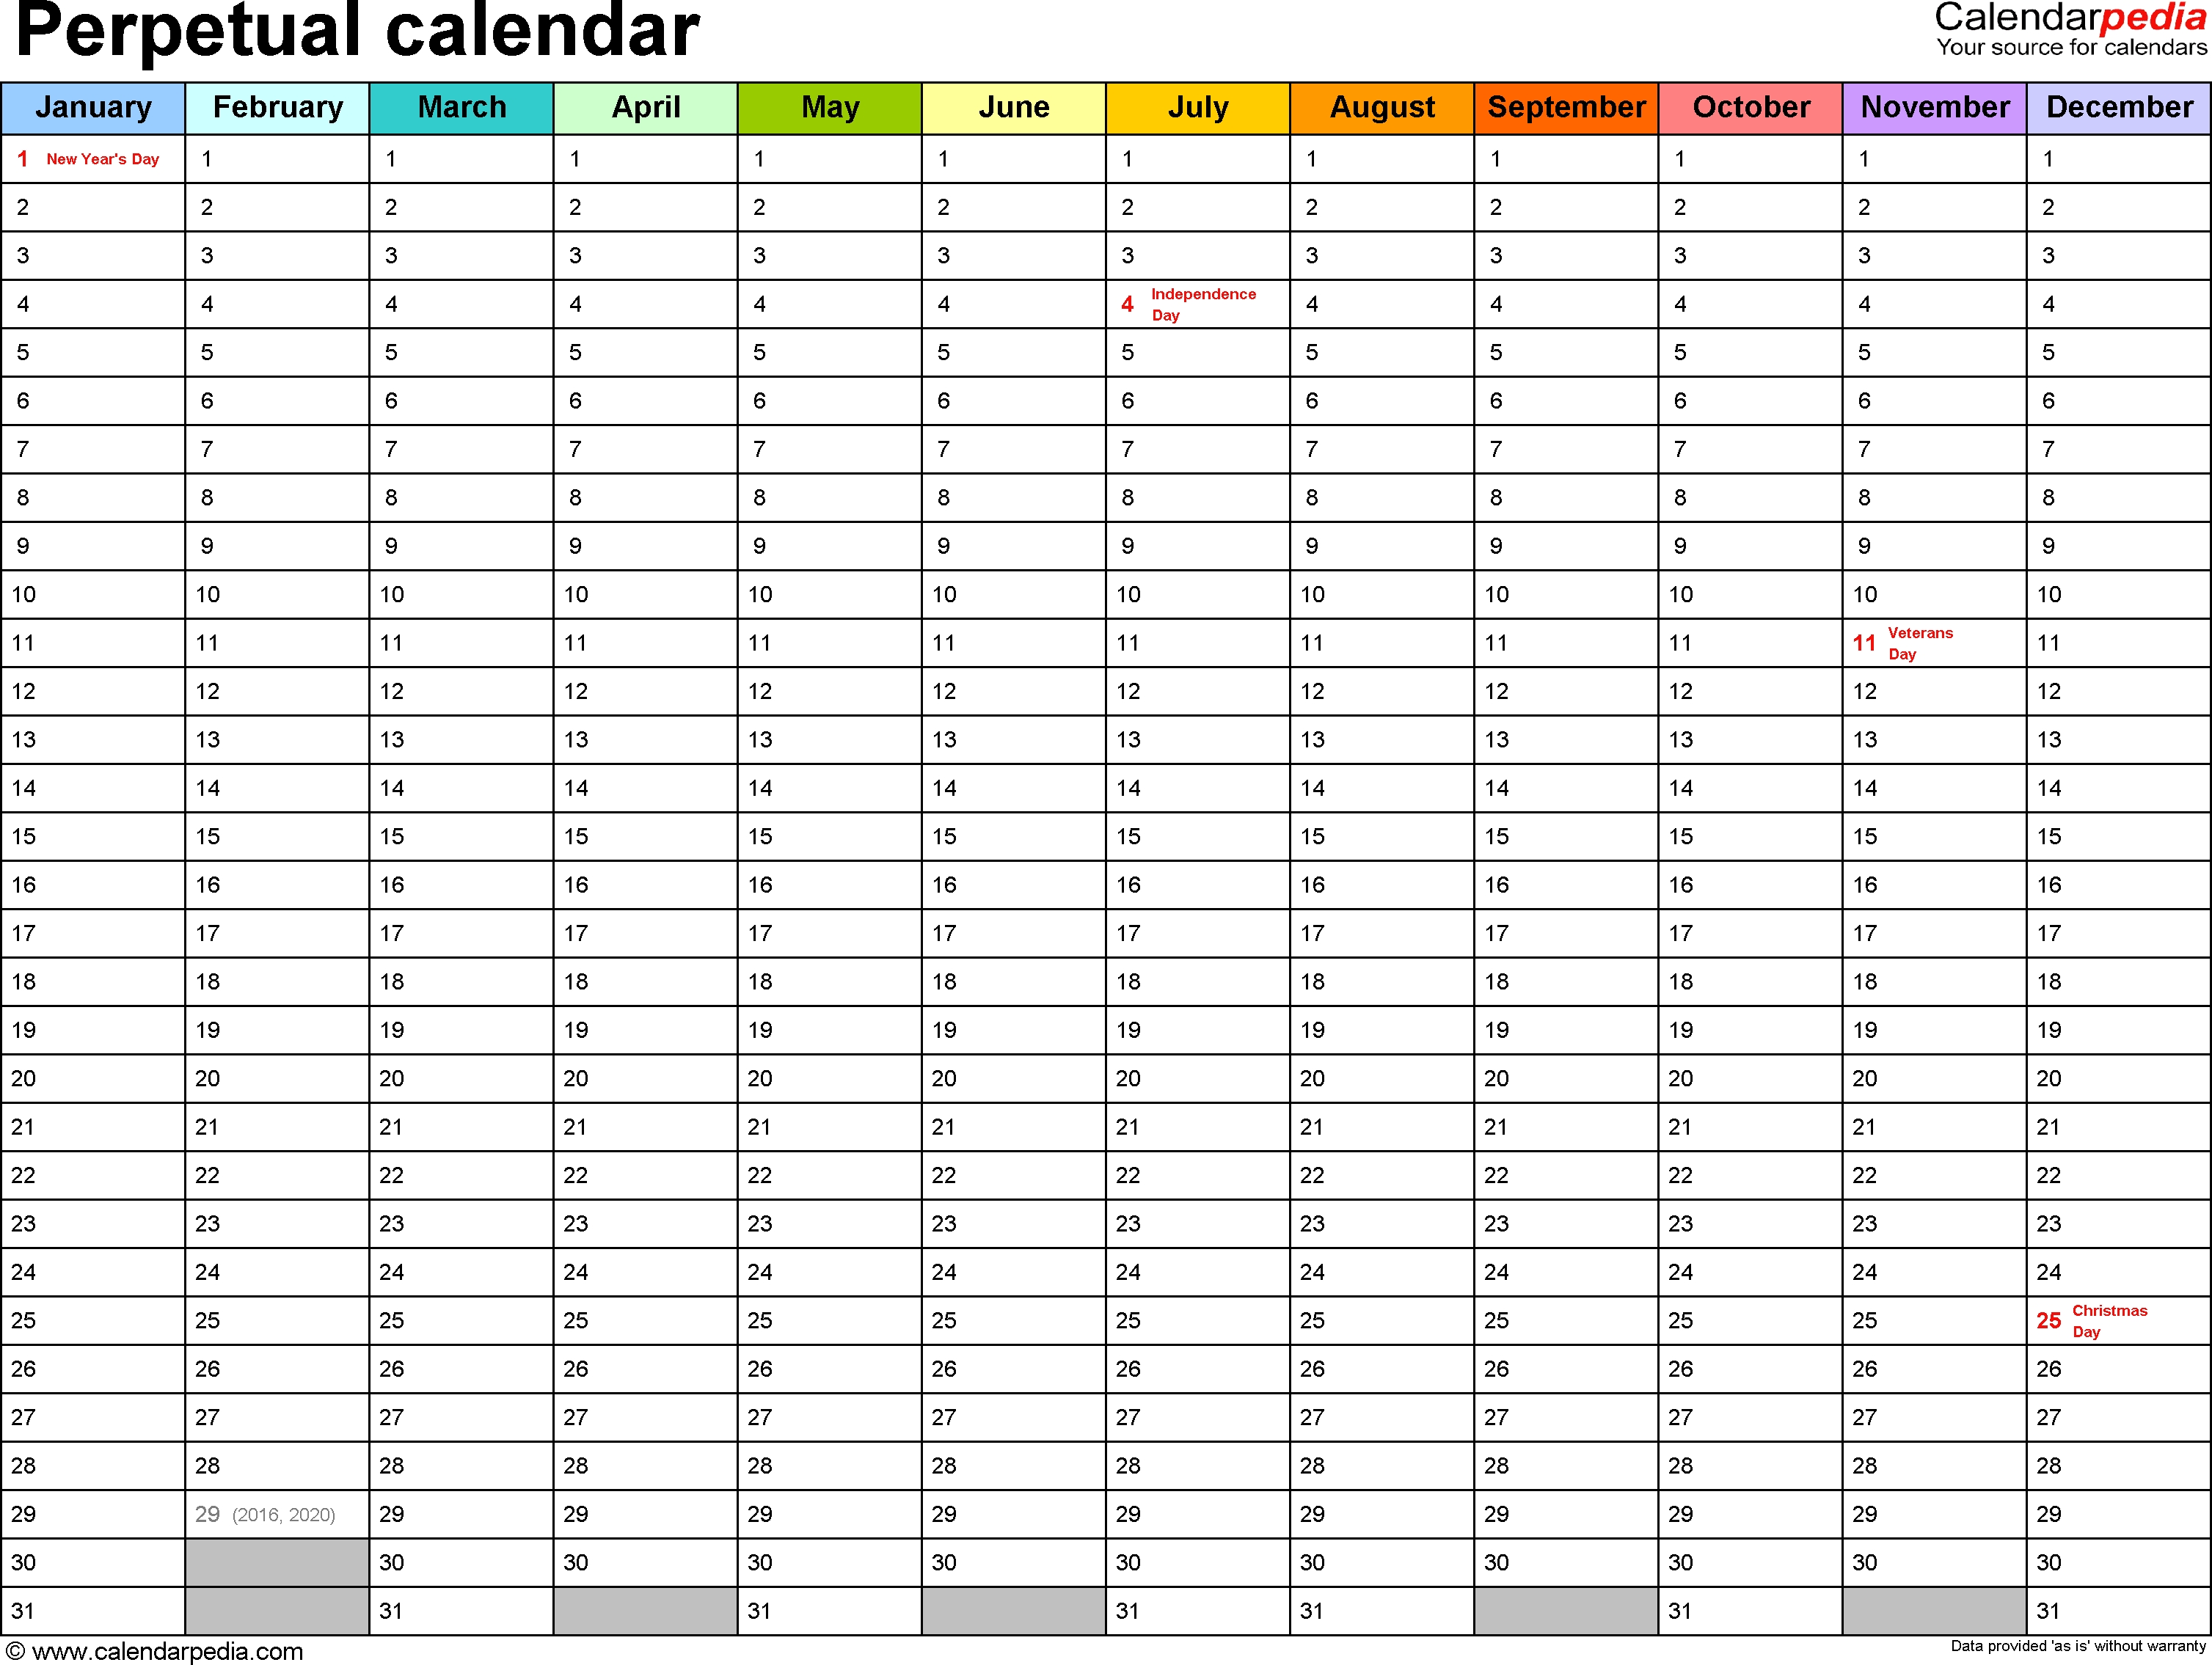 Monthly Calendar Template Excel Planner Budget Free Download regarding 12 Month Schedule Template Blank